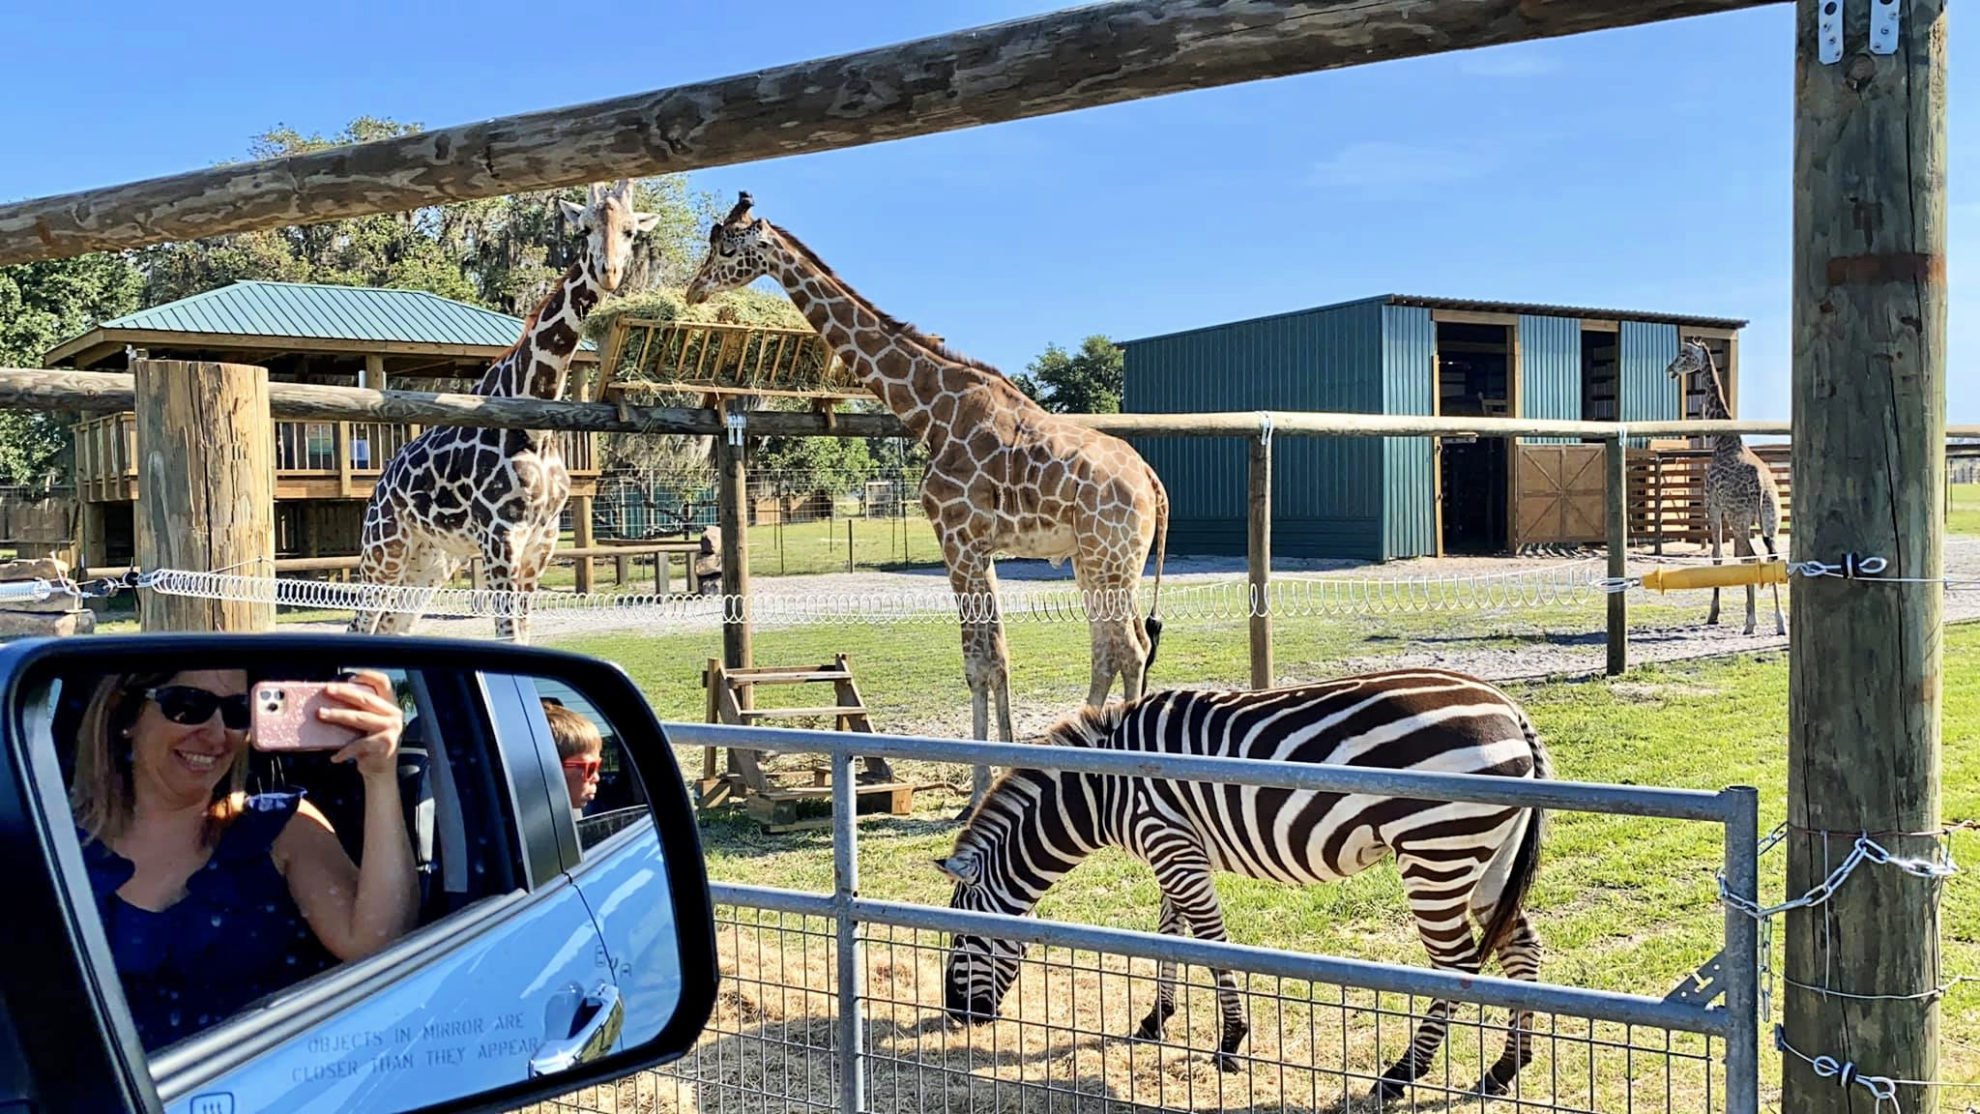 Zebras and Giraffes at Wild Florida Drive-Thru Safari Park